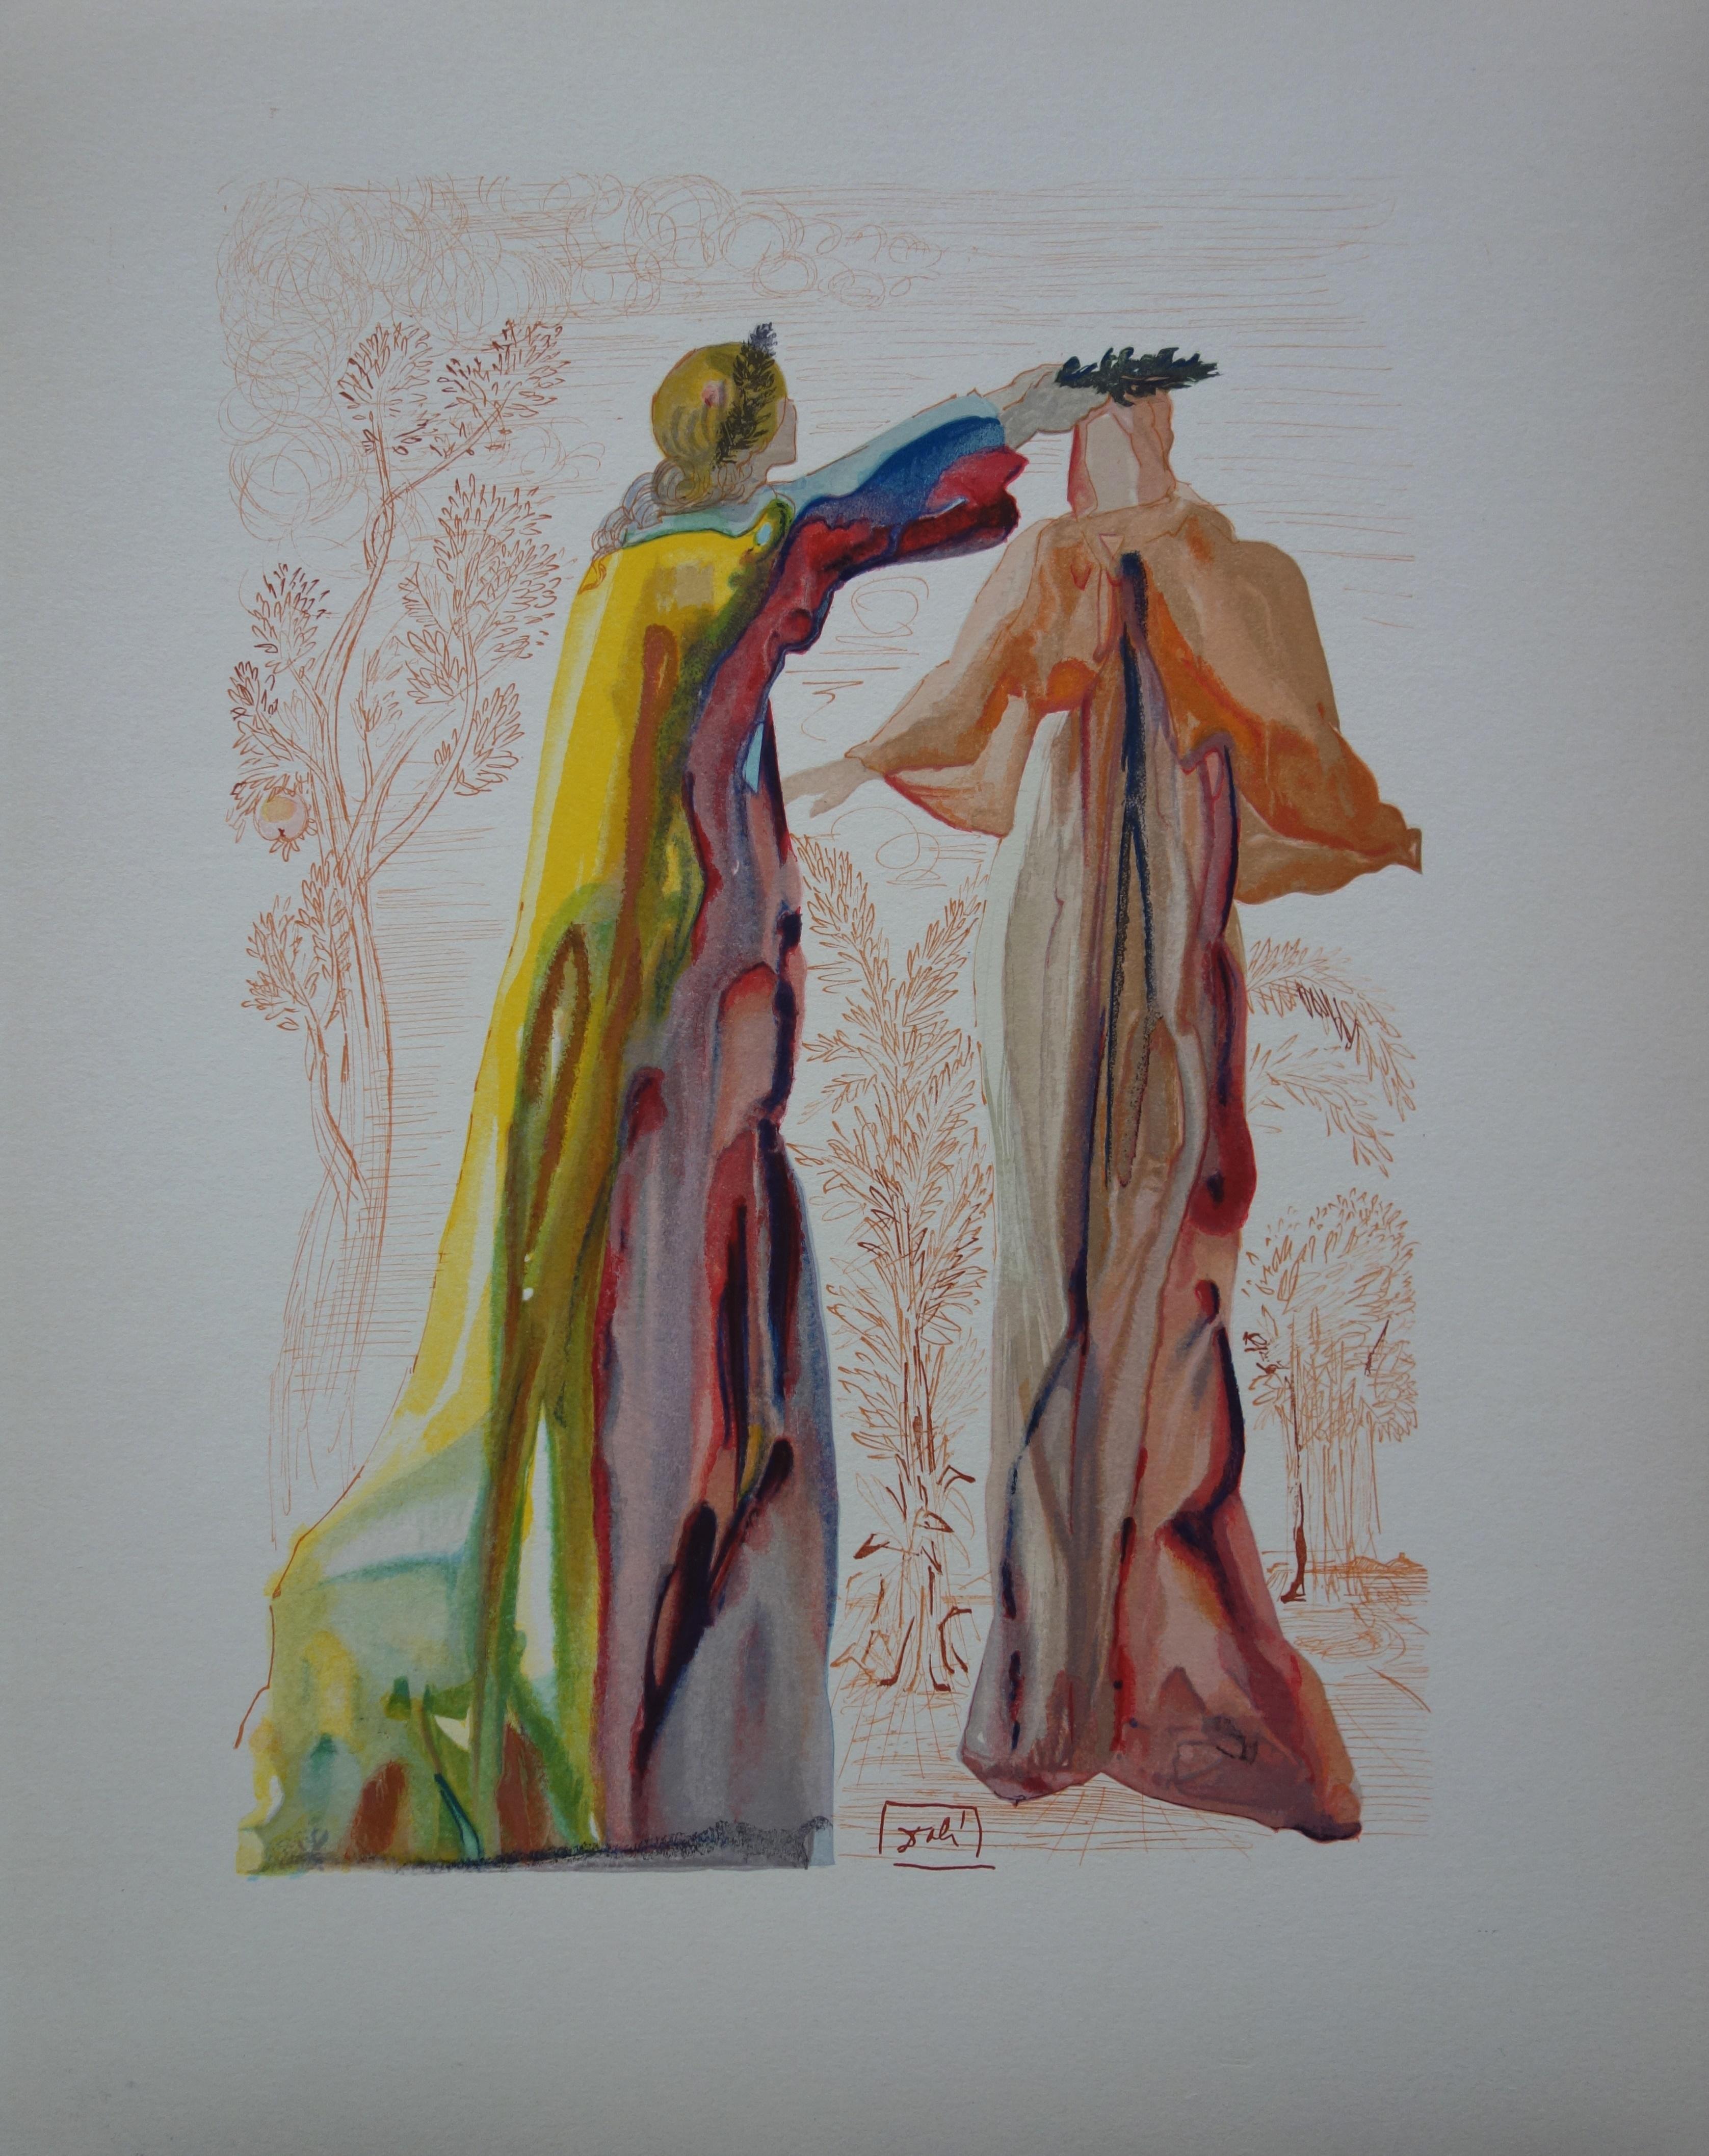 Salvador Dalí Figurative Print - Purgatory 27 - The Last Words of Virgil - Woodcut - 1963